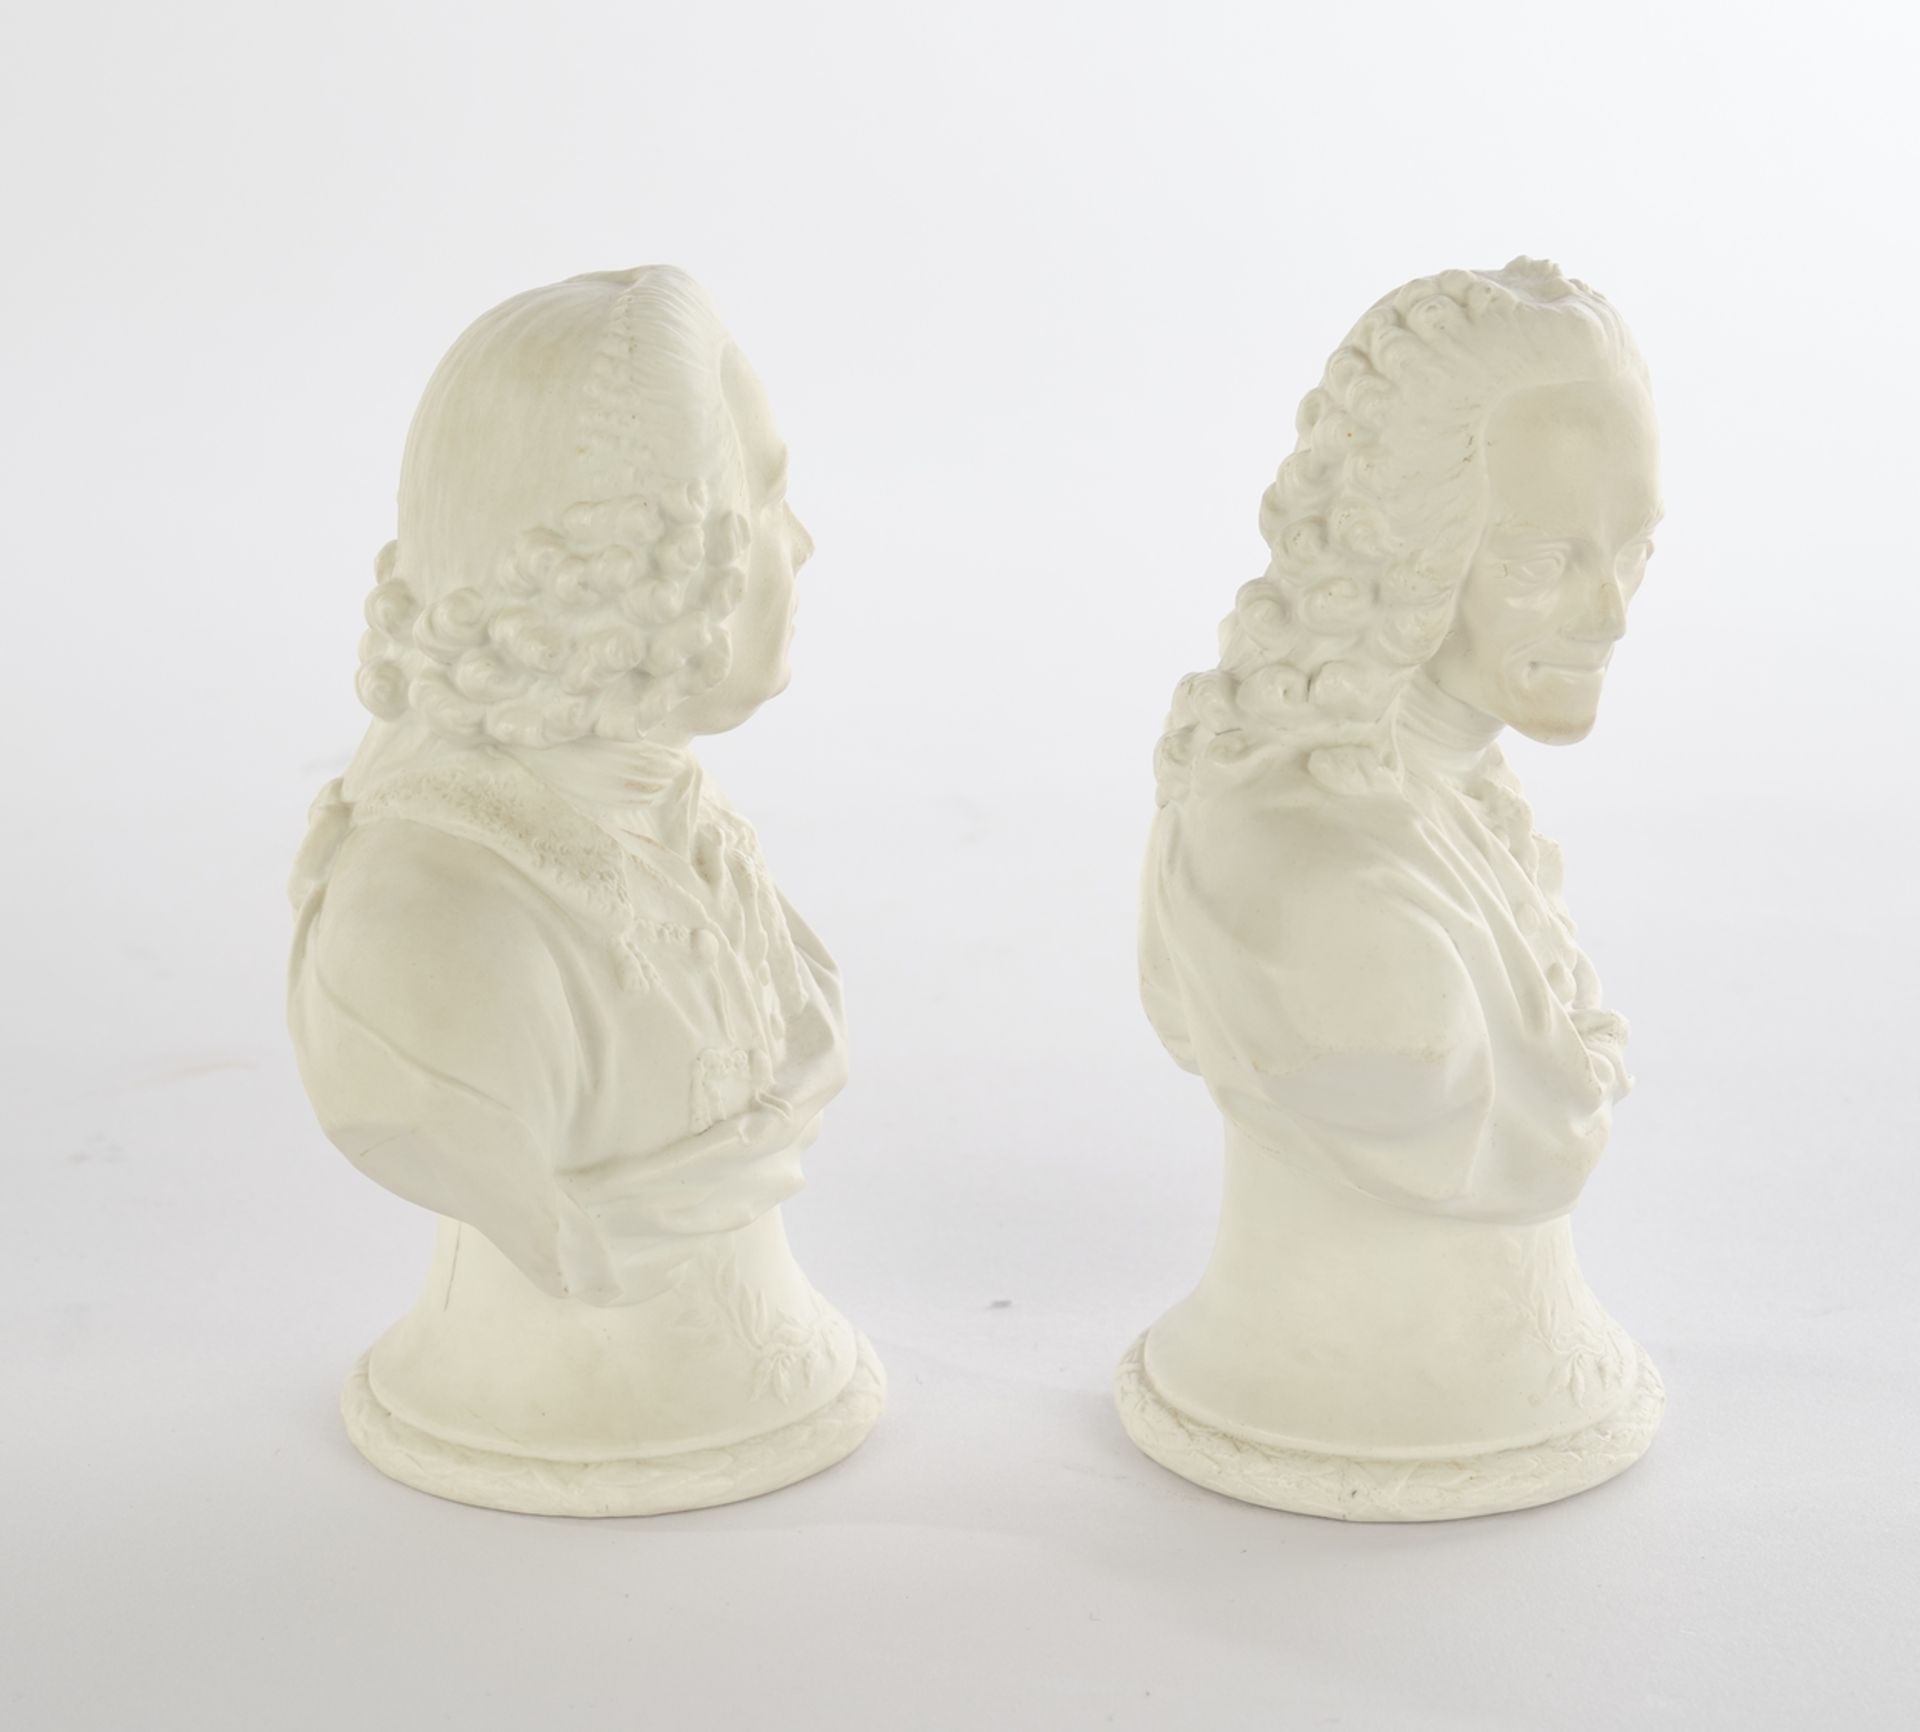 2 busts, "Marquis d'Argens", , "Marquis d'Argens", "Voltaire", KPM Berlin, after 1775 (d'Argens) an - Image 4 of 6